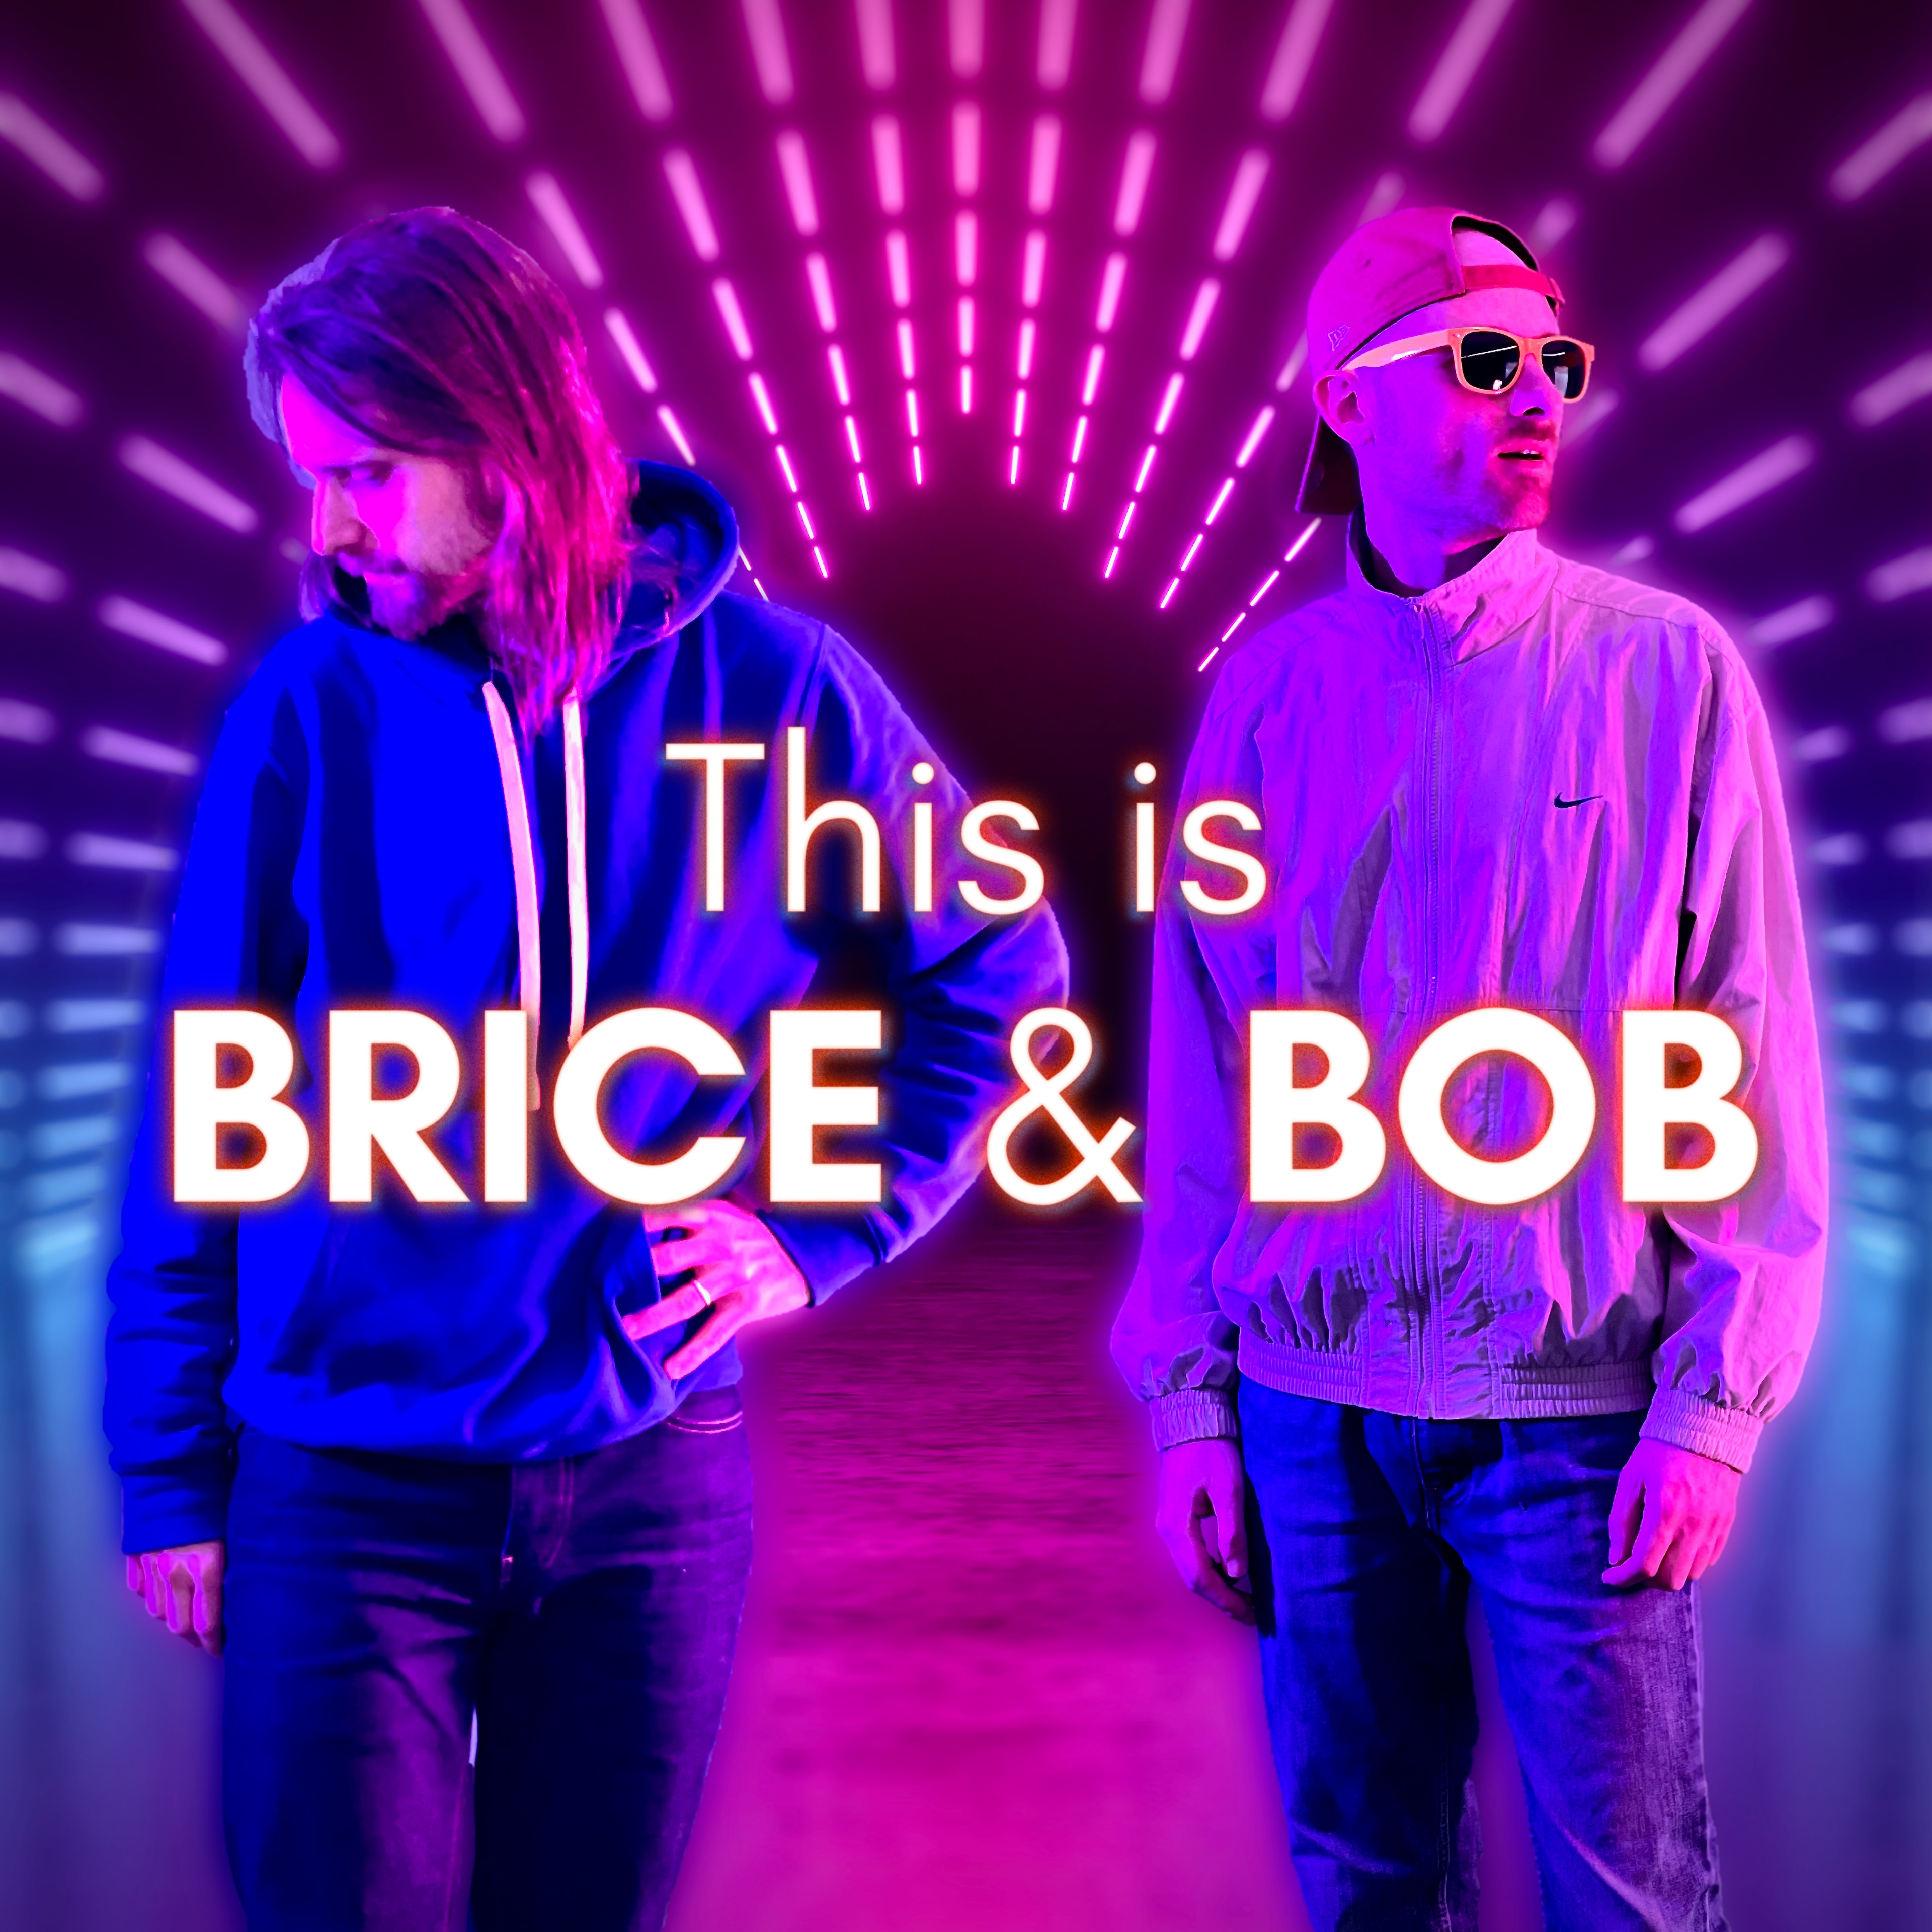 Brice & Bob sur les plateformes de streaming : Spotify, Deezer, Apple Music, Youtube Music, Amazon Music...